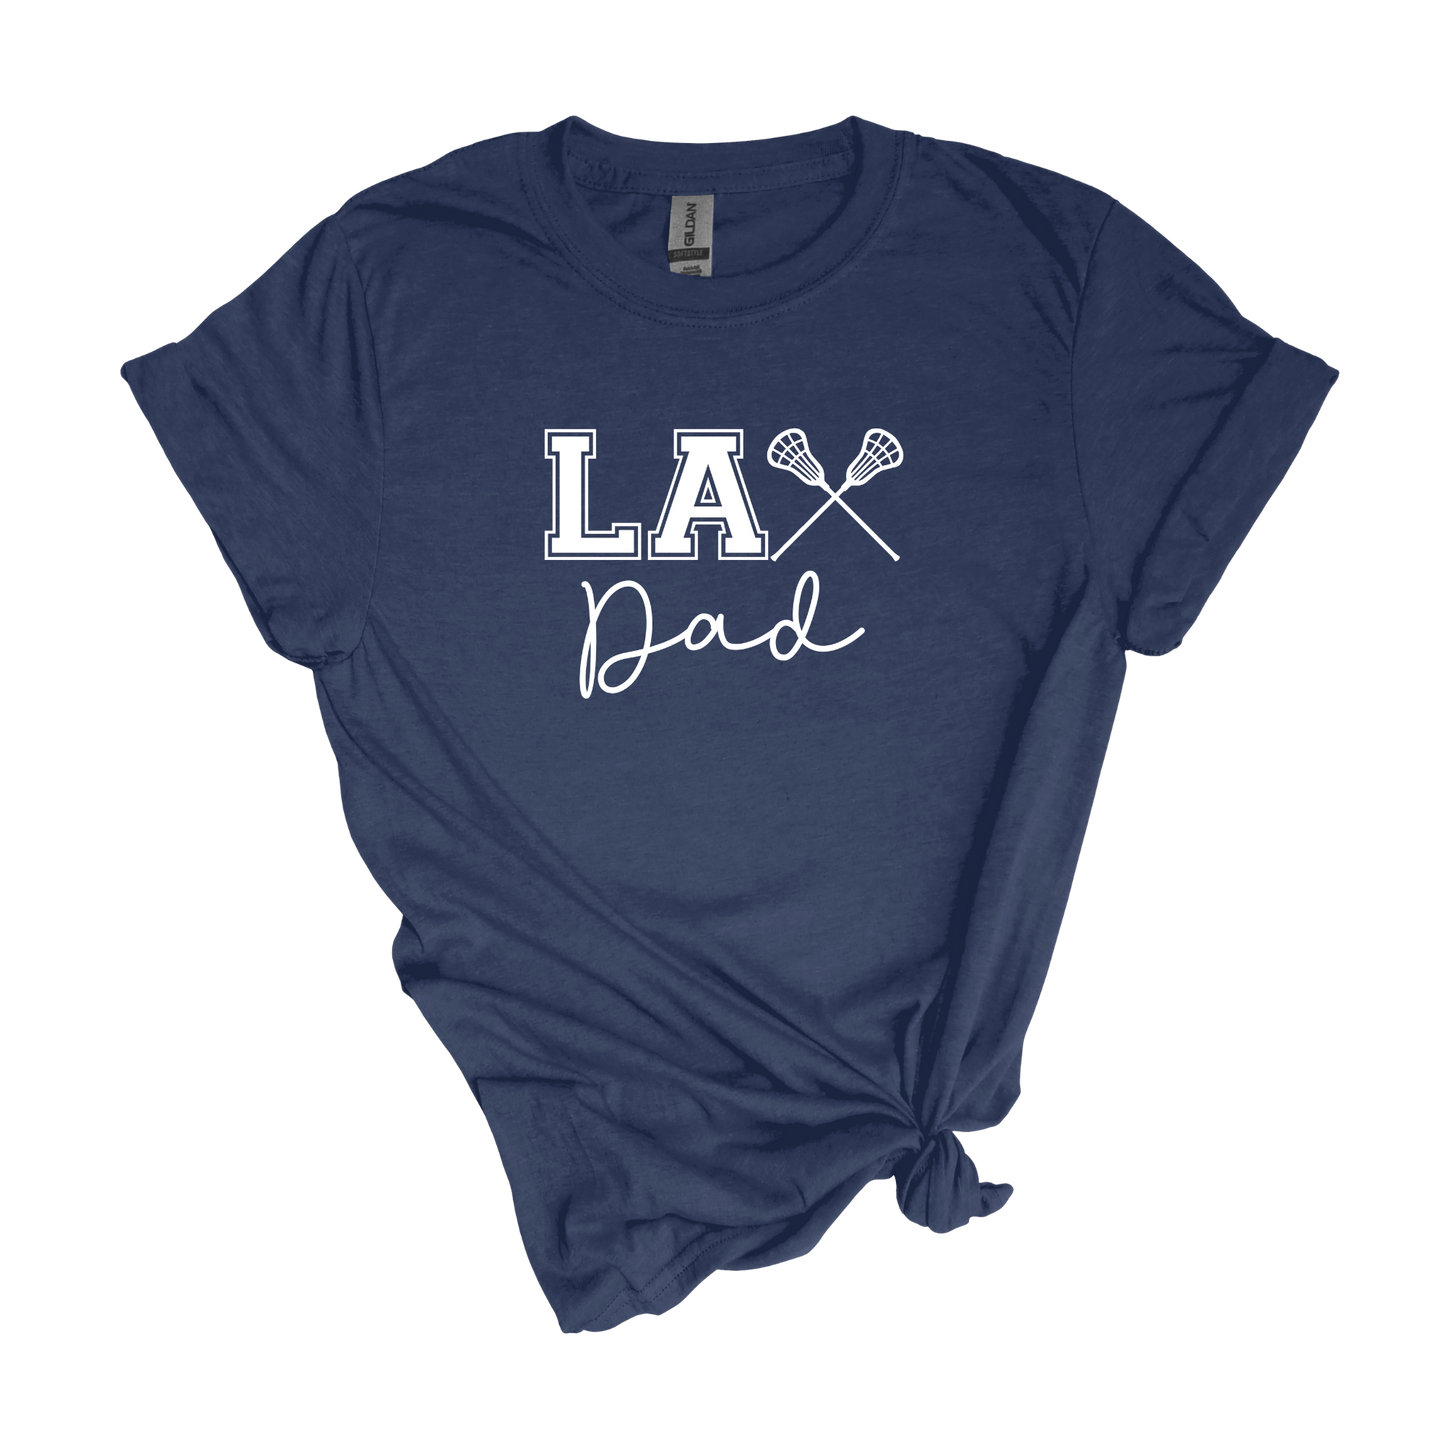 LAX Dad - Adult Unisex Soft T-shirt